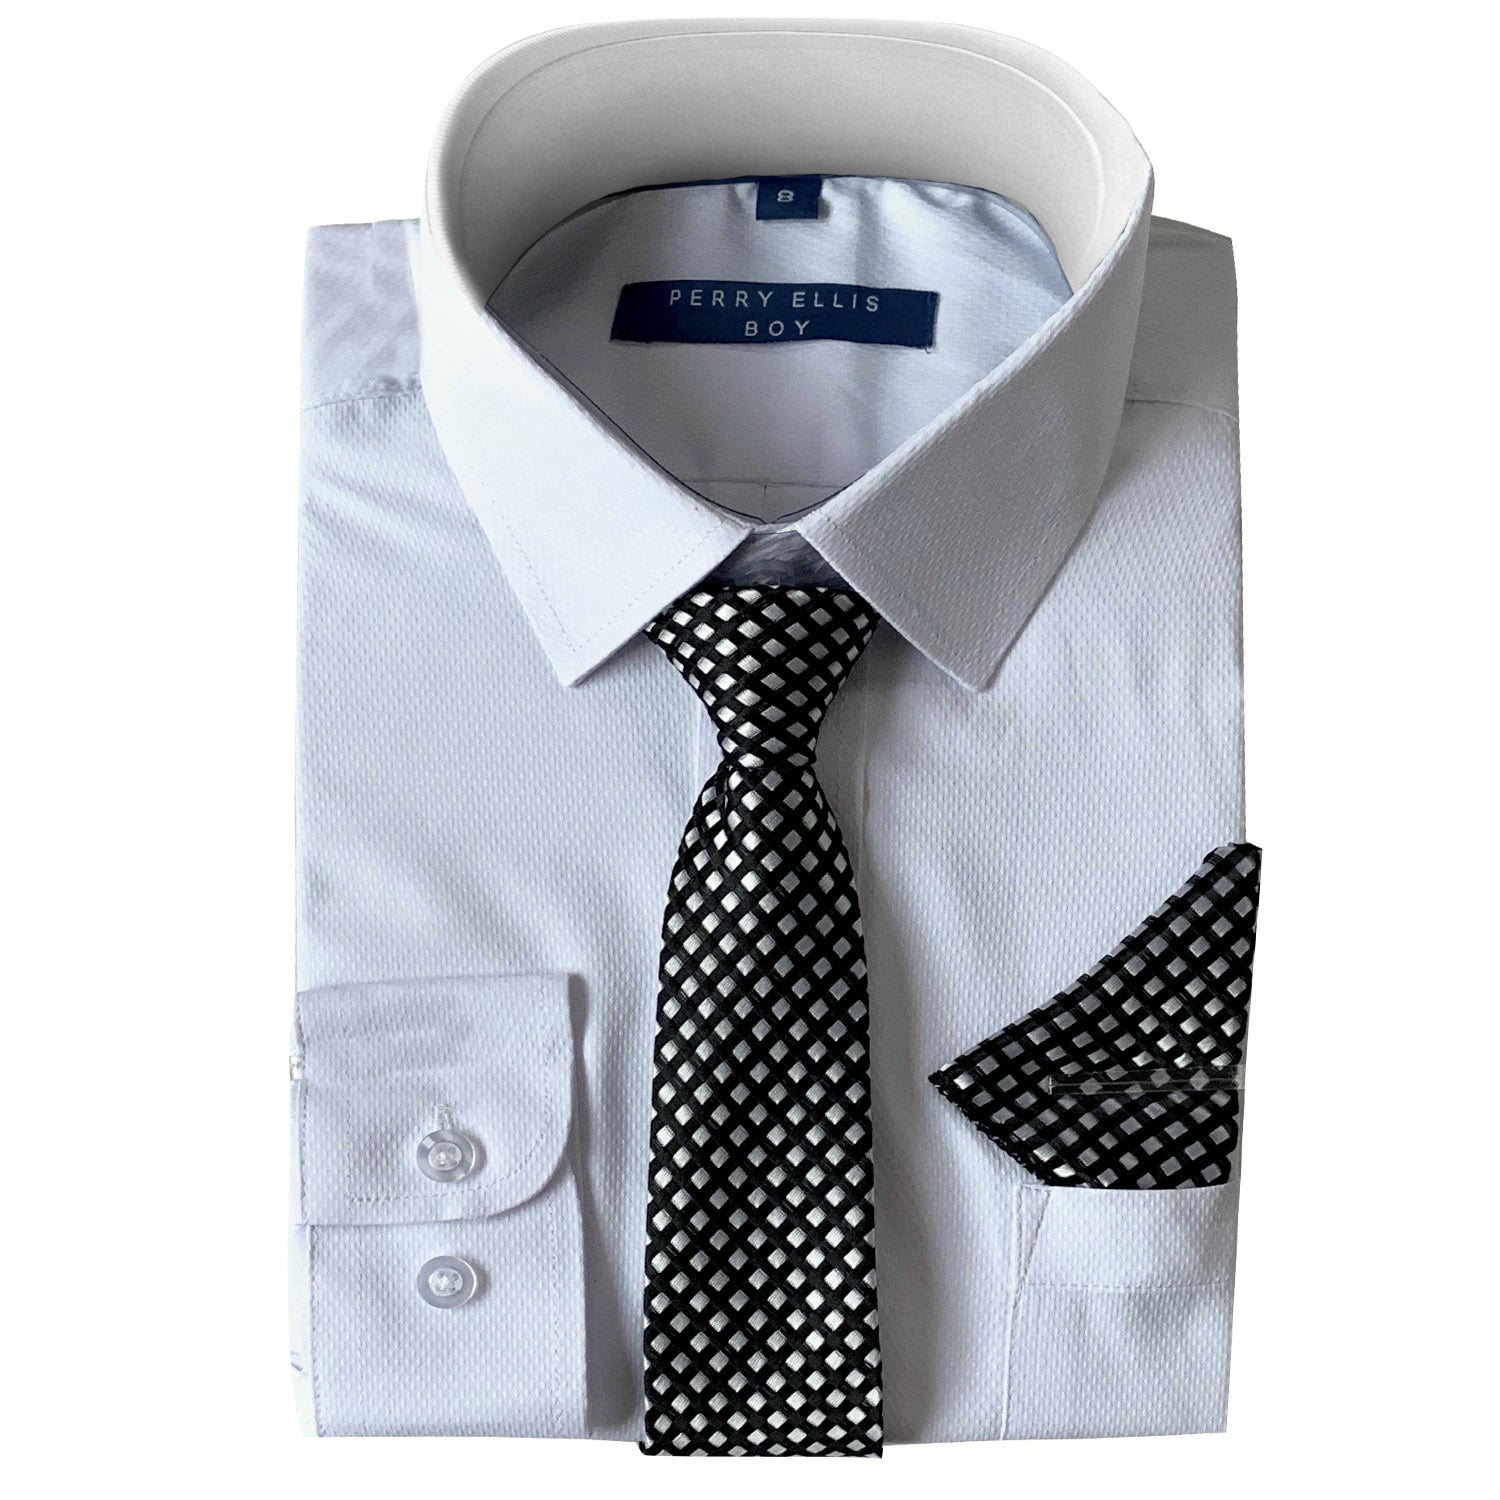 Perry Ellis Boys Dress Shirts w Lt Grey Tie Solid Shirts w Patterned Tie